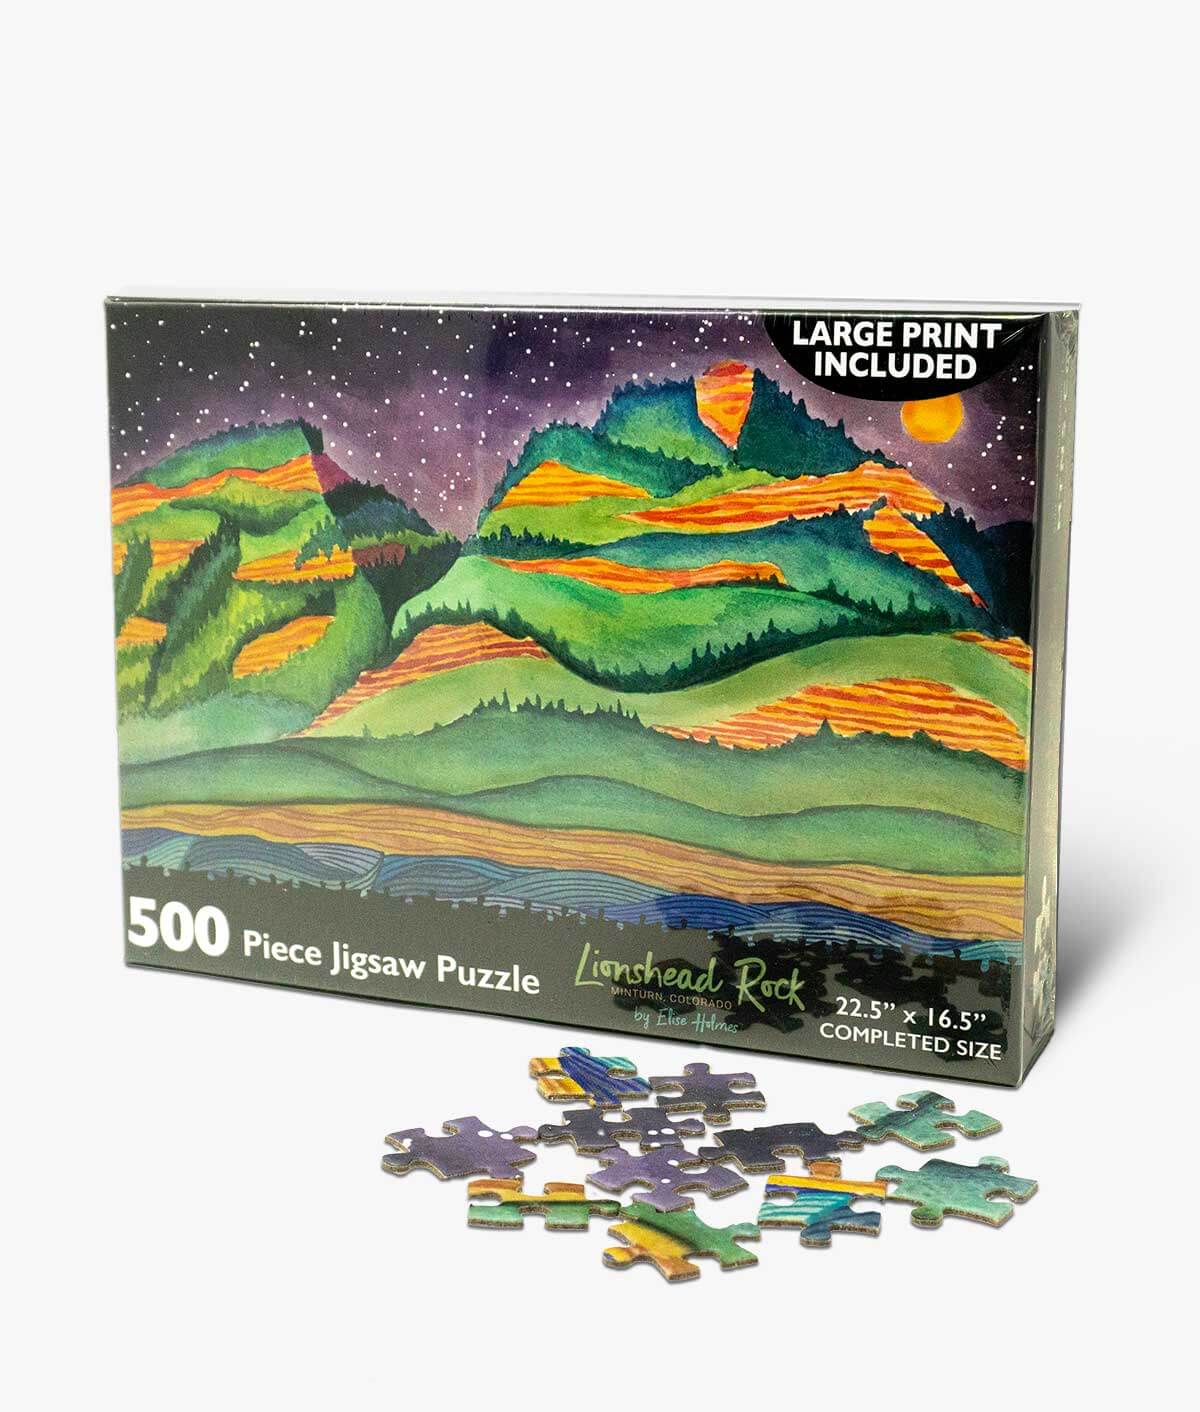 Gore Range Jigsaw Puzzle | 1000 Piece Jigsaw Puzzle